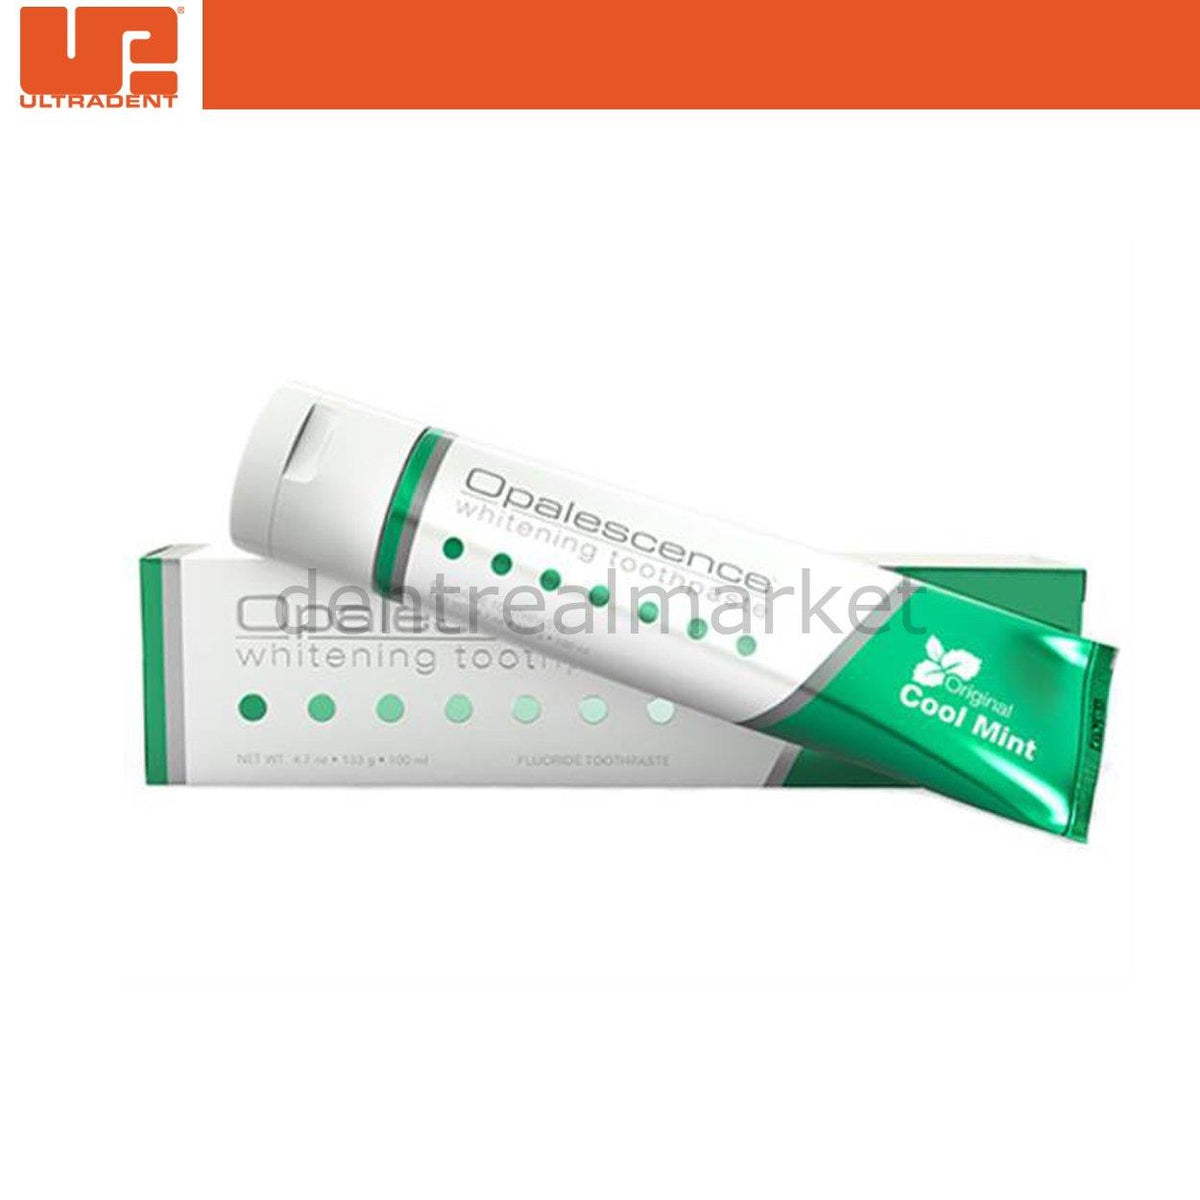 DentrealStore - Ultradent Opalescence Whitening Toothpaste -Teeth Bleaching - 133 gr